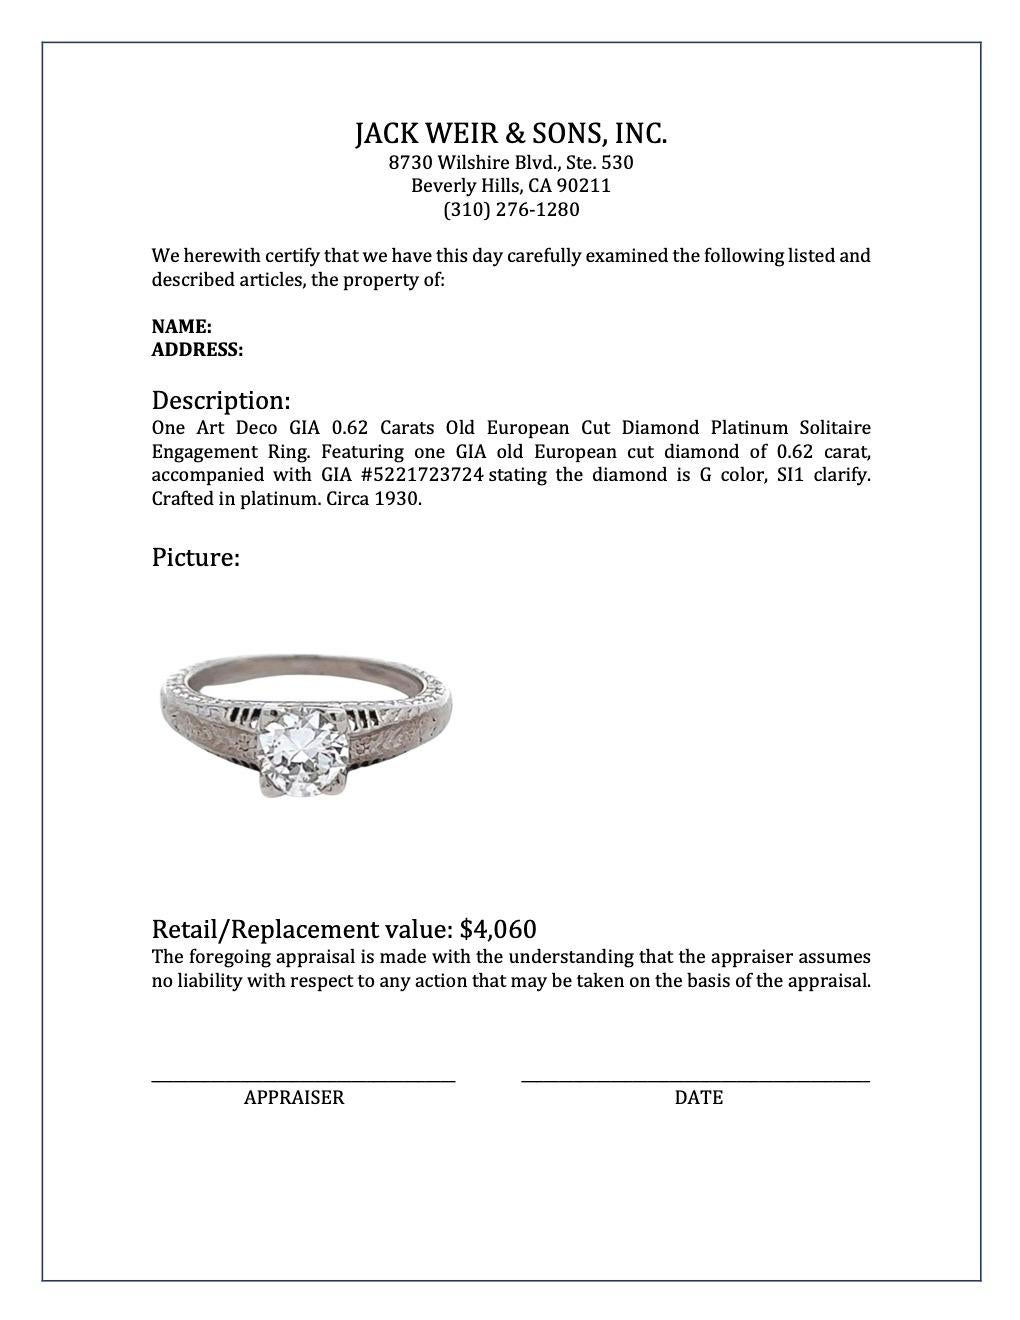 Art Deco Gia 0.62 Carats Old European Cut Diamond Platinum Solitaire Engagement  4